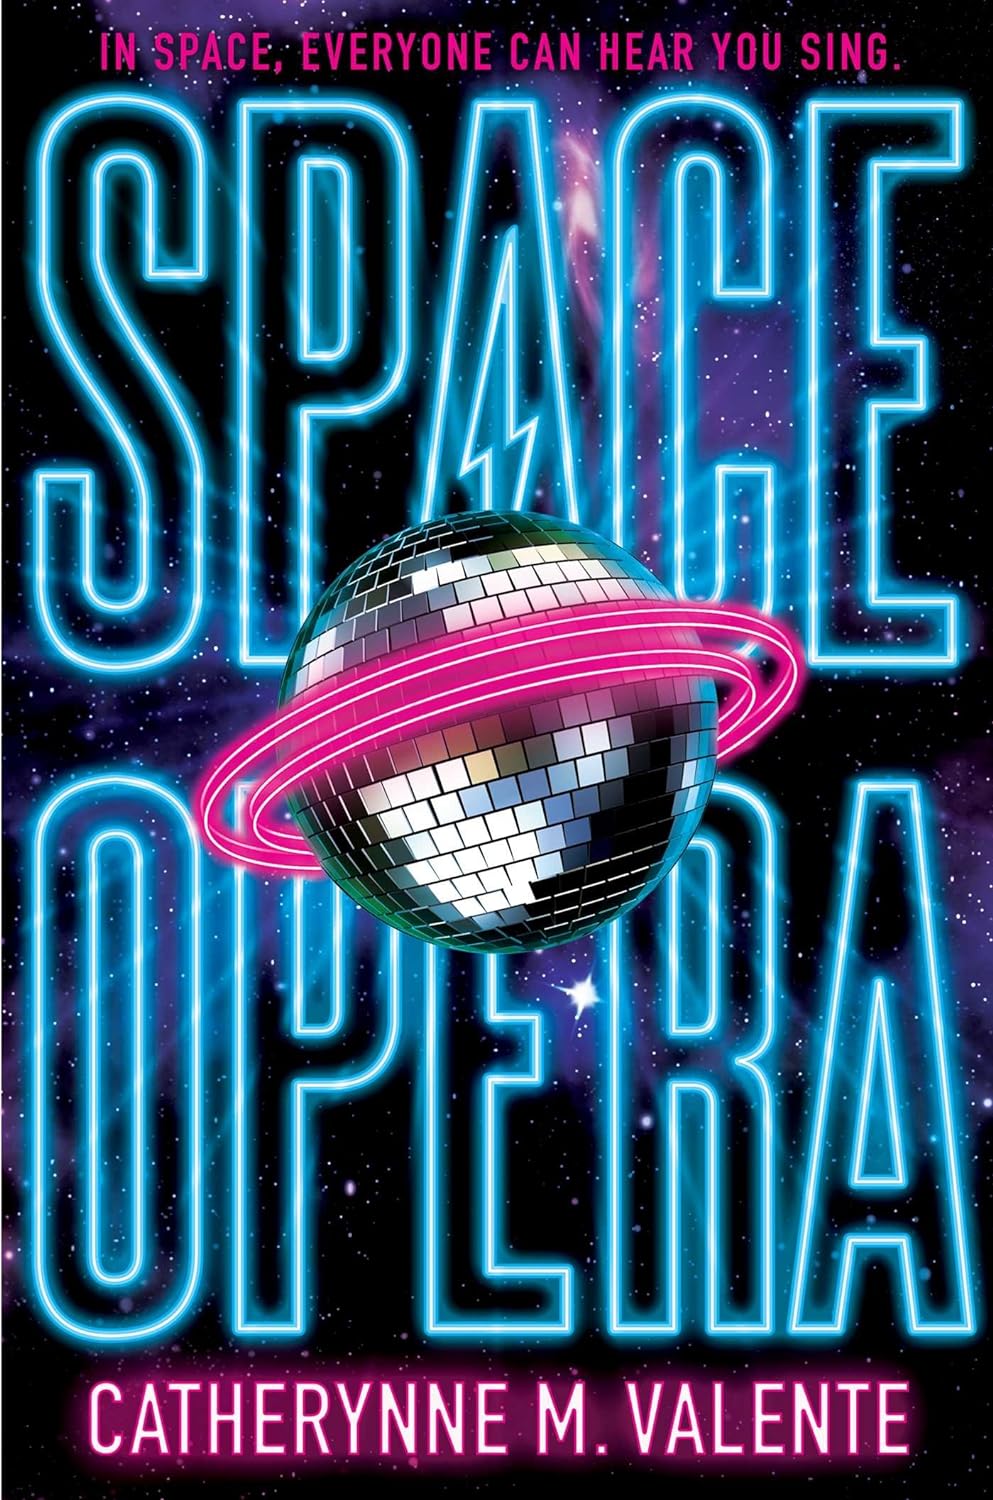 Catherynne M. Valente: Space Opera (2018, Gallery / Saga Press)